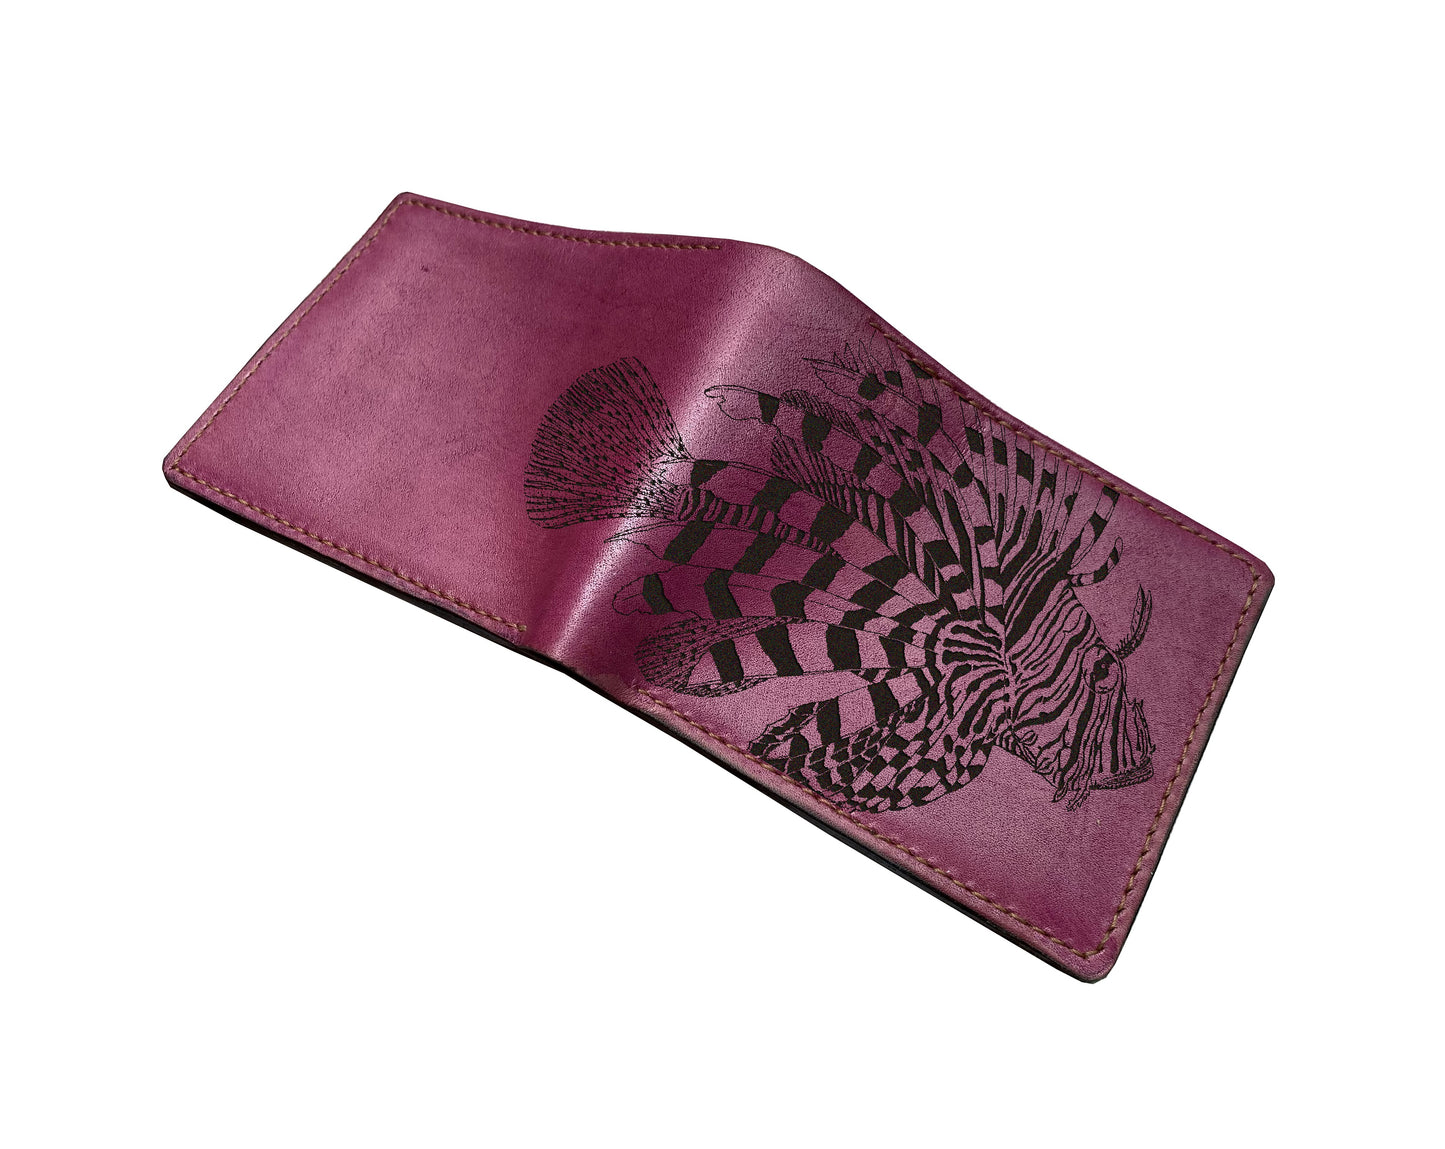 Personalized leather men's wallet, Lionfish art wallet, animal pattern present for men, ocean fish men gift